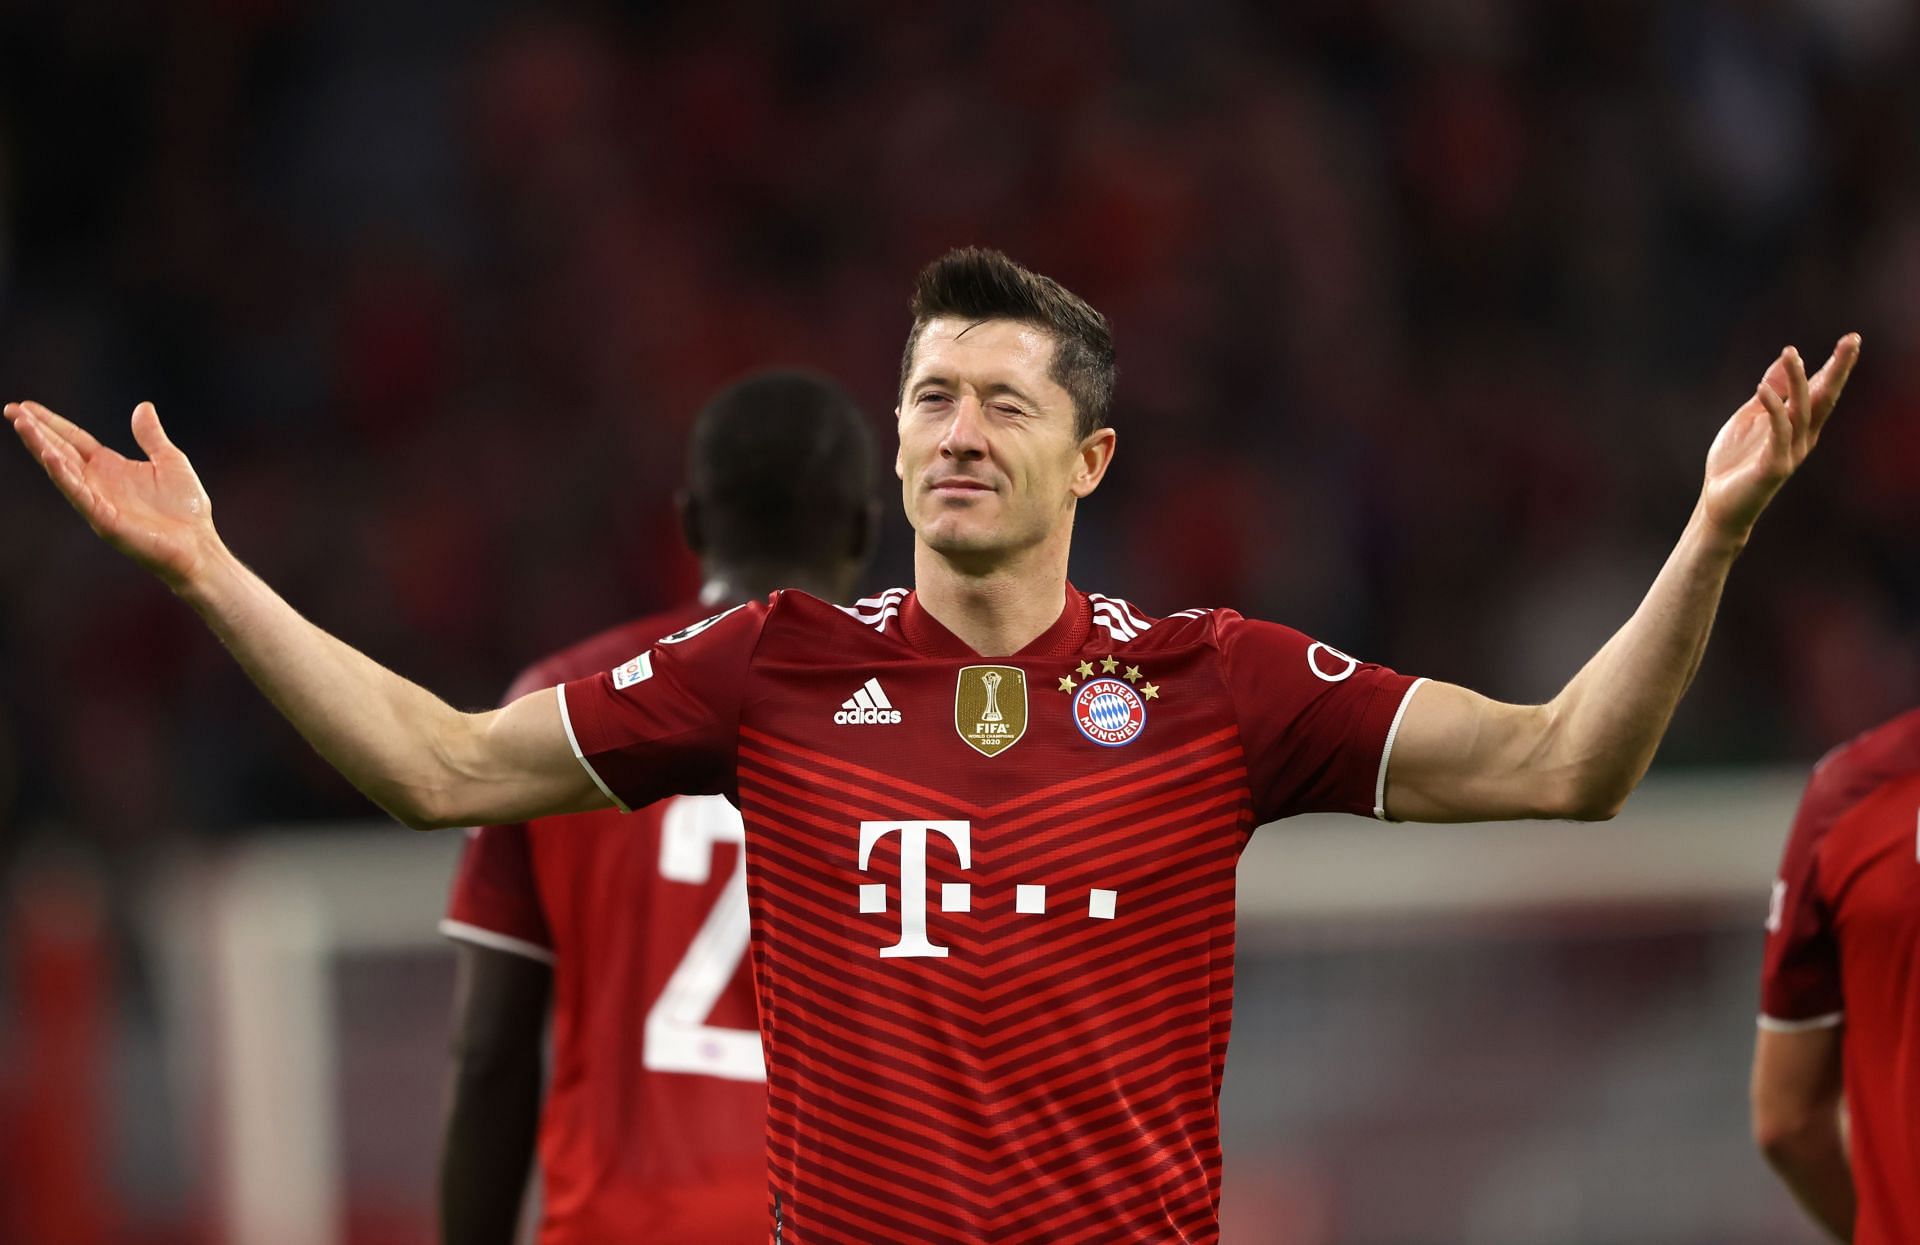 Robert Lewandowski continues to shine with Bayern Munich